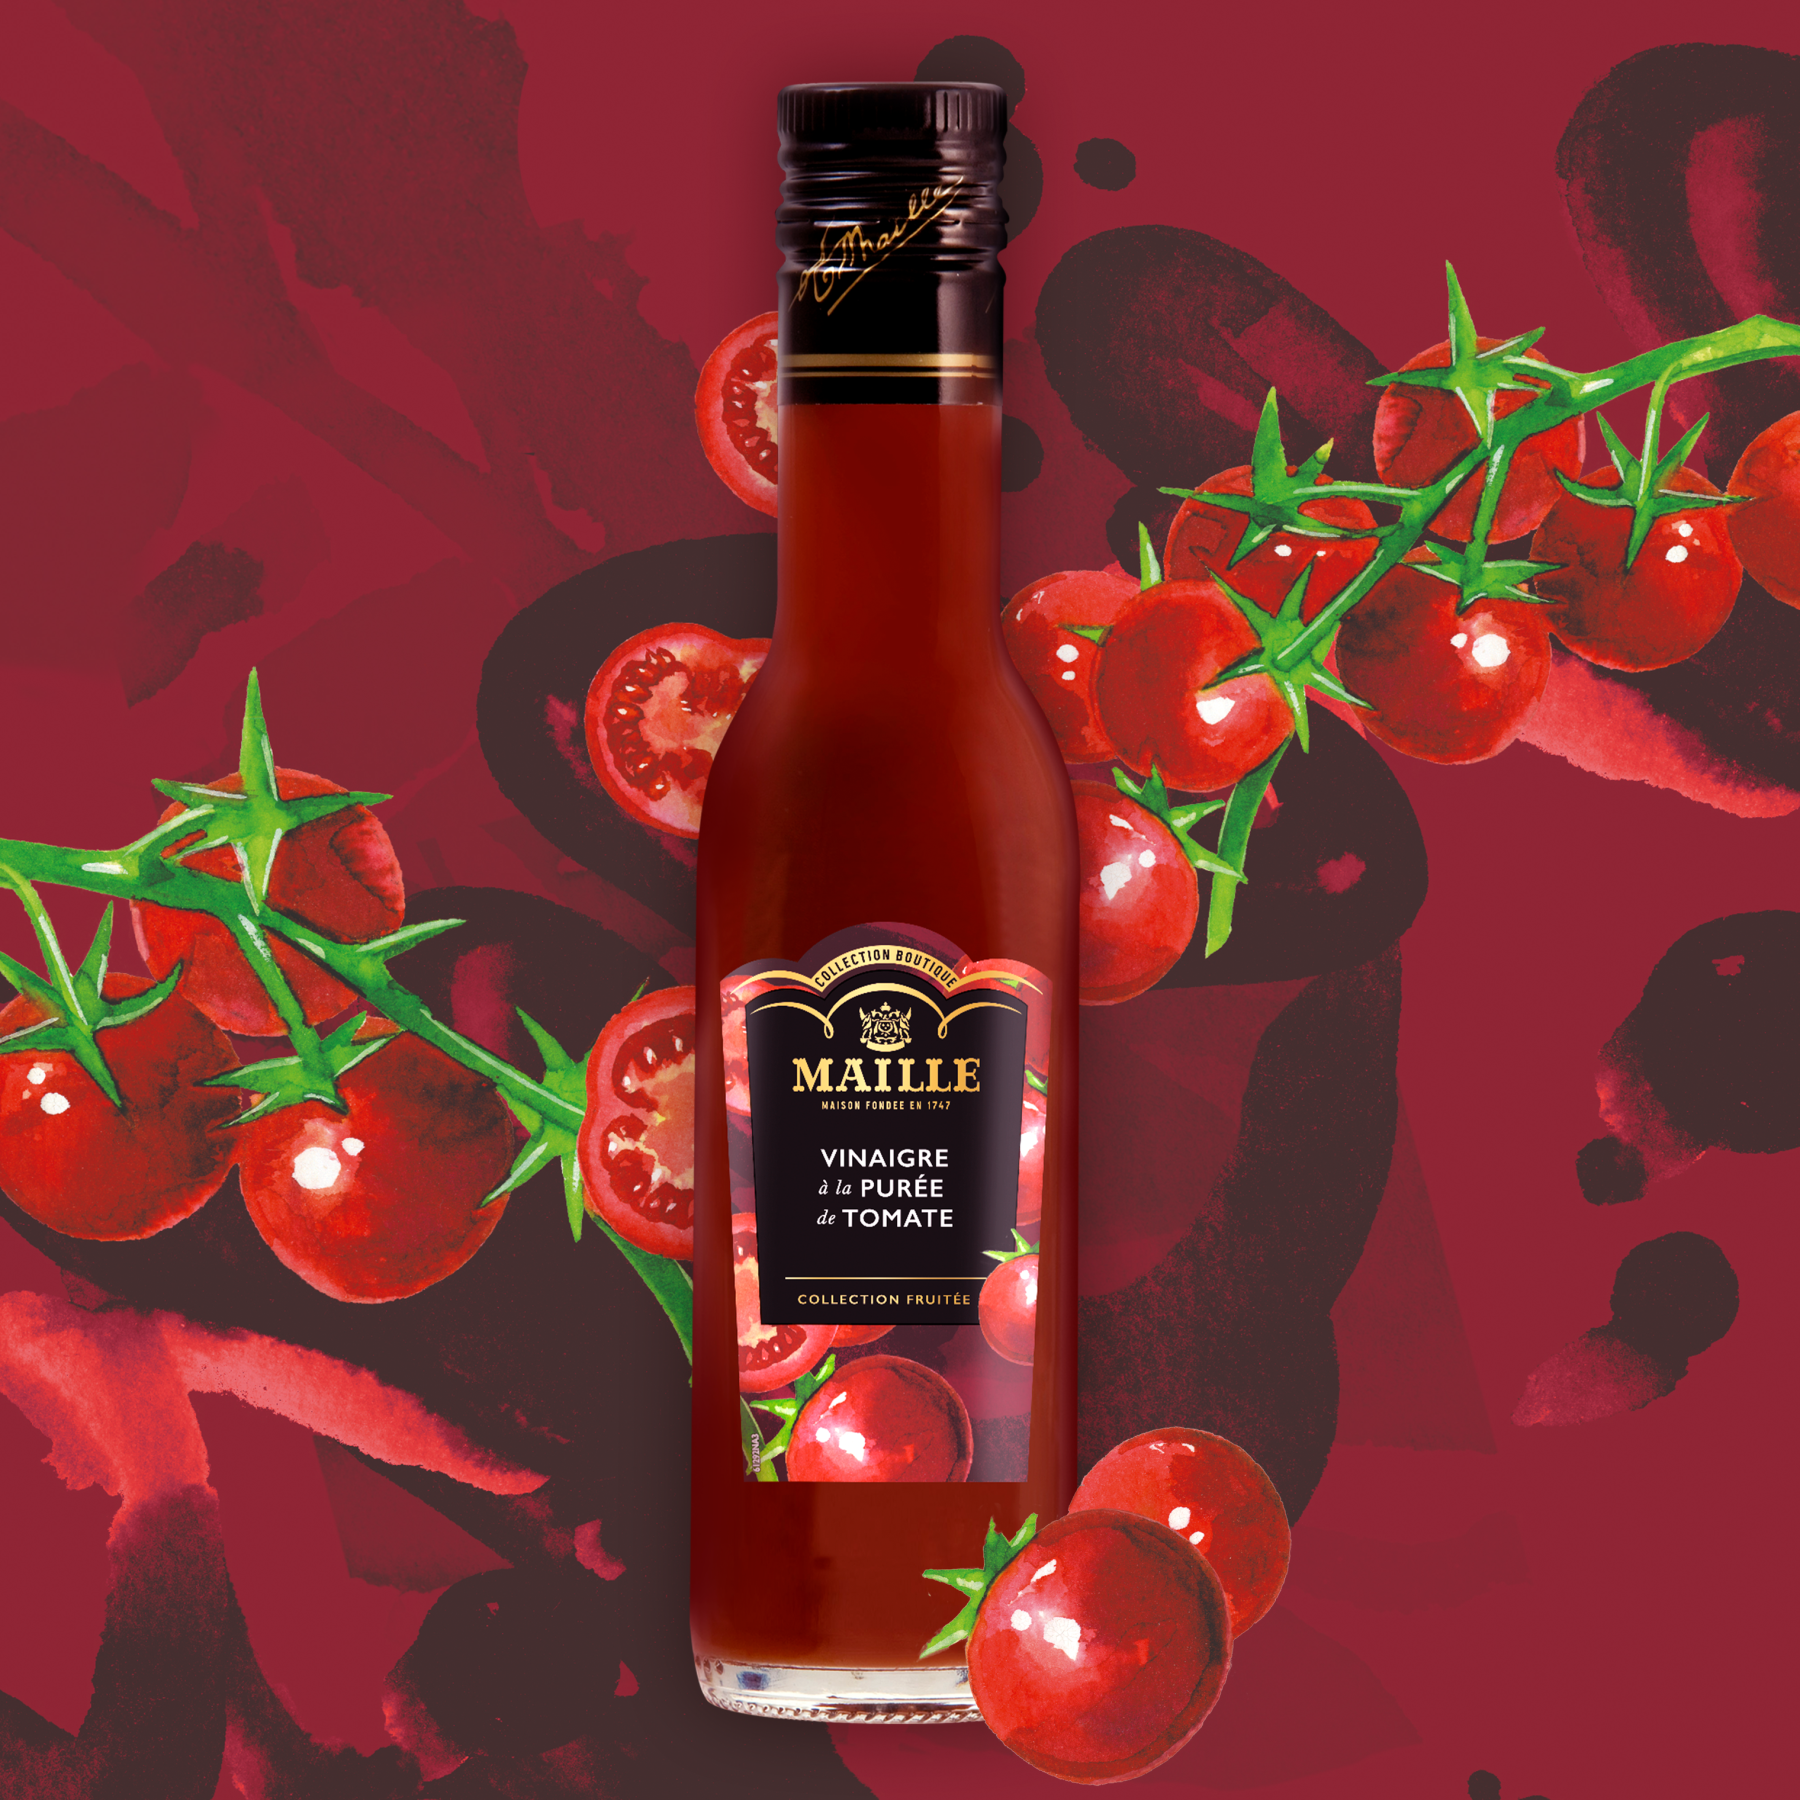 Maille - Vinaigre a la puree de tomate, 250 ml, new visual